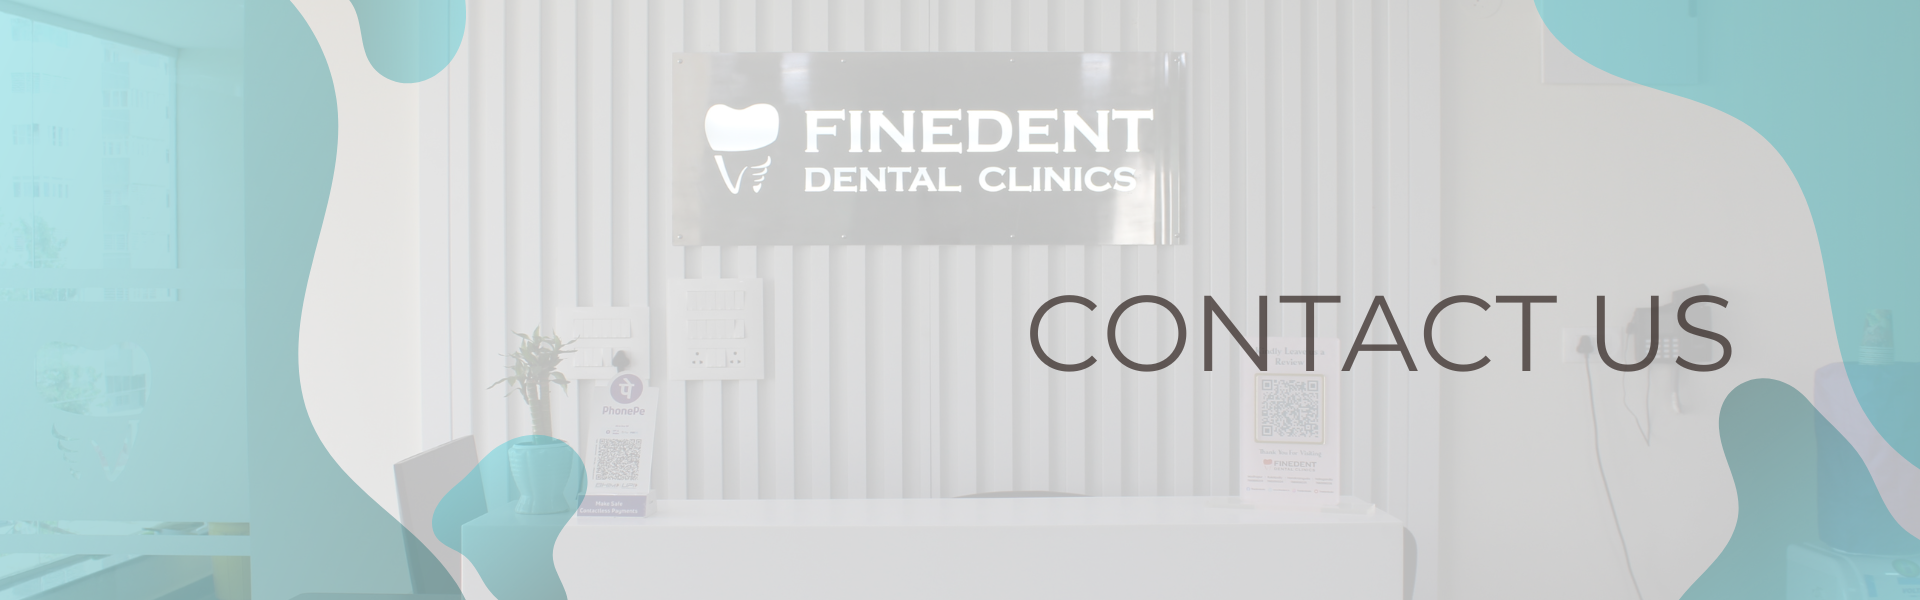 Finedent dental clinics logo